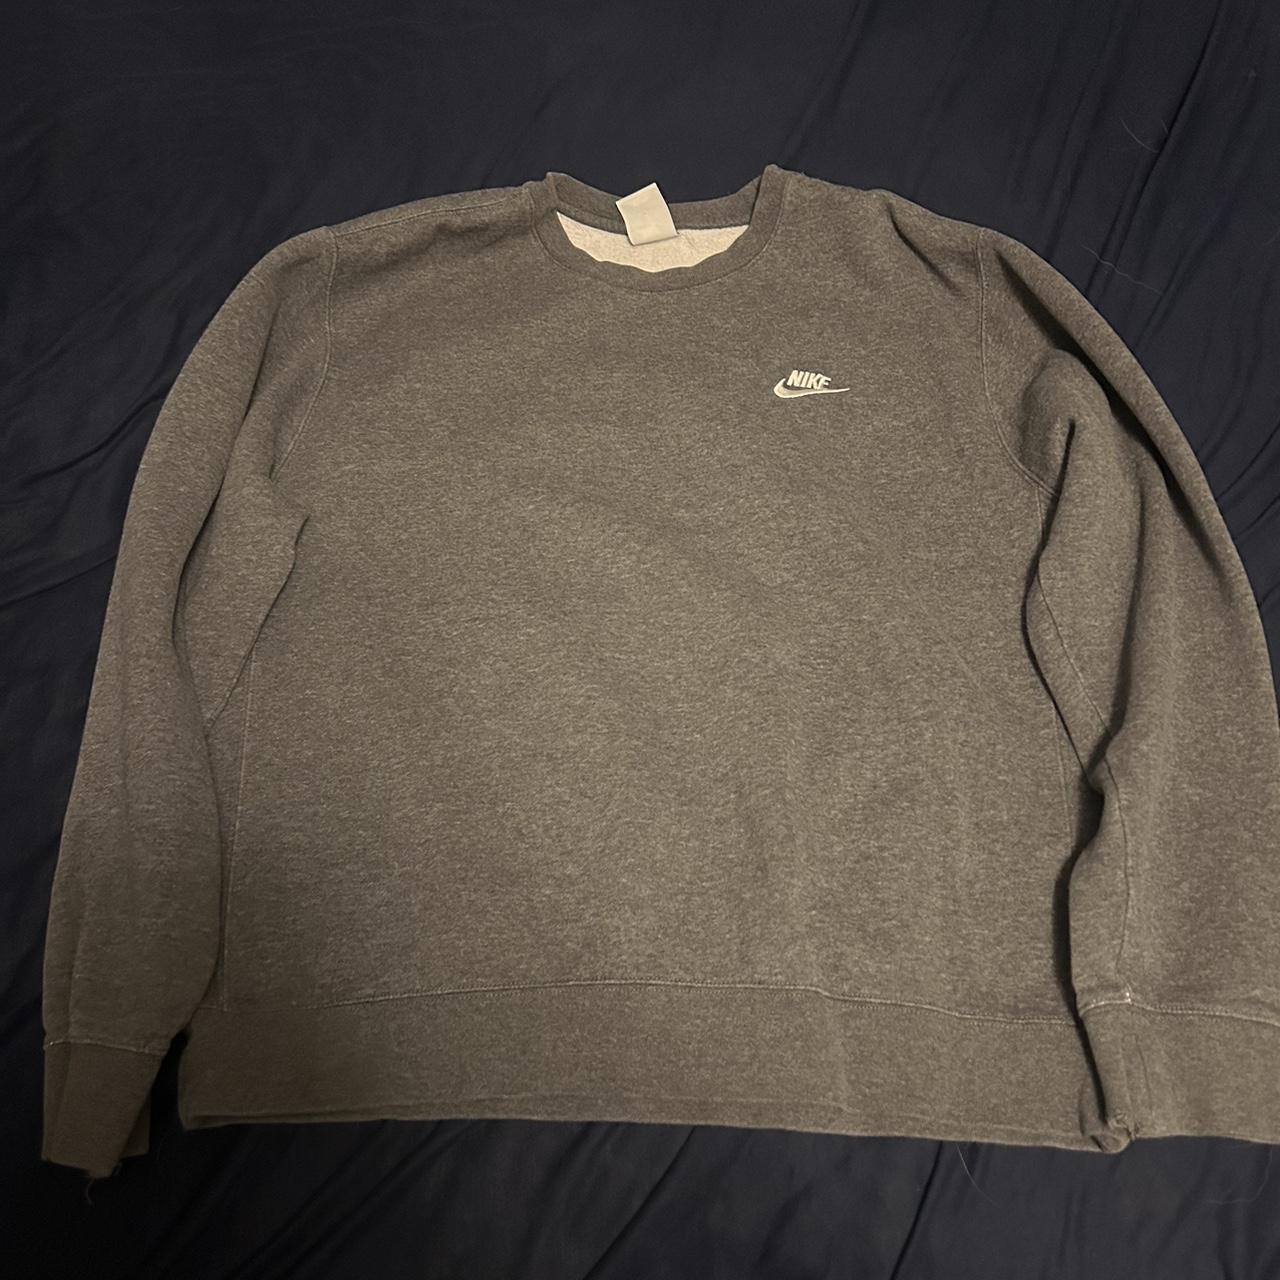 grey nike sweater size medium - Depop